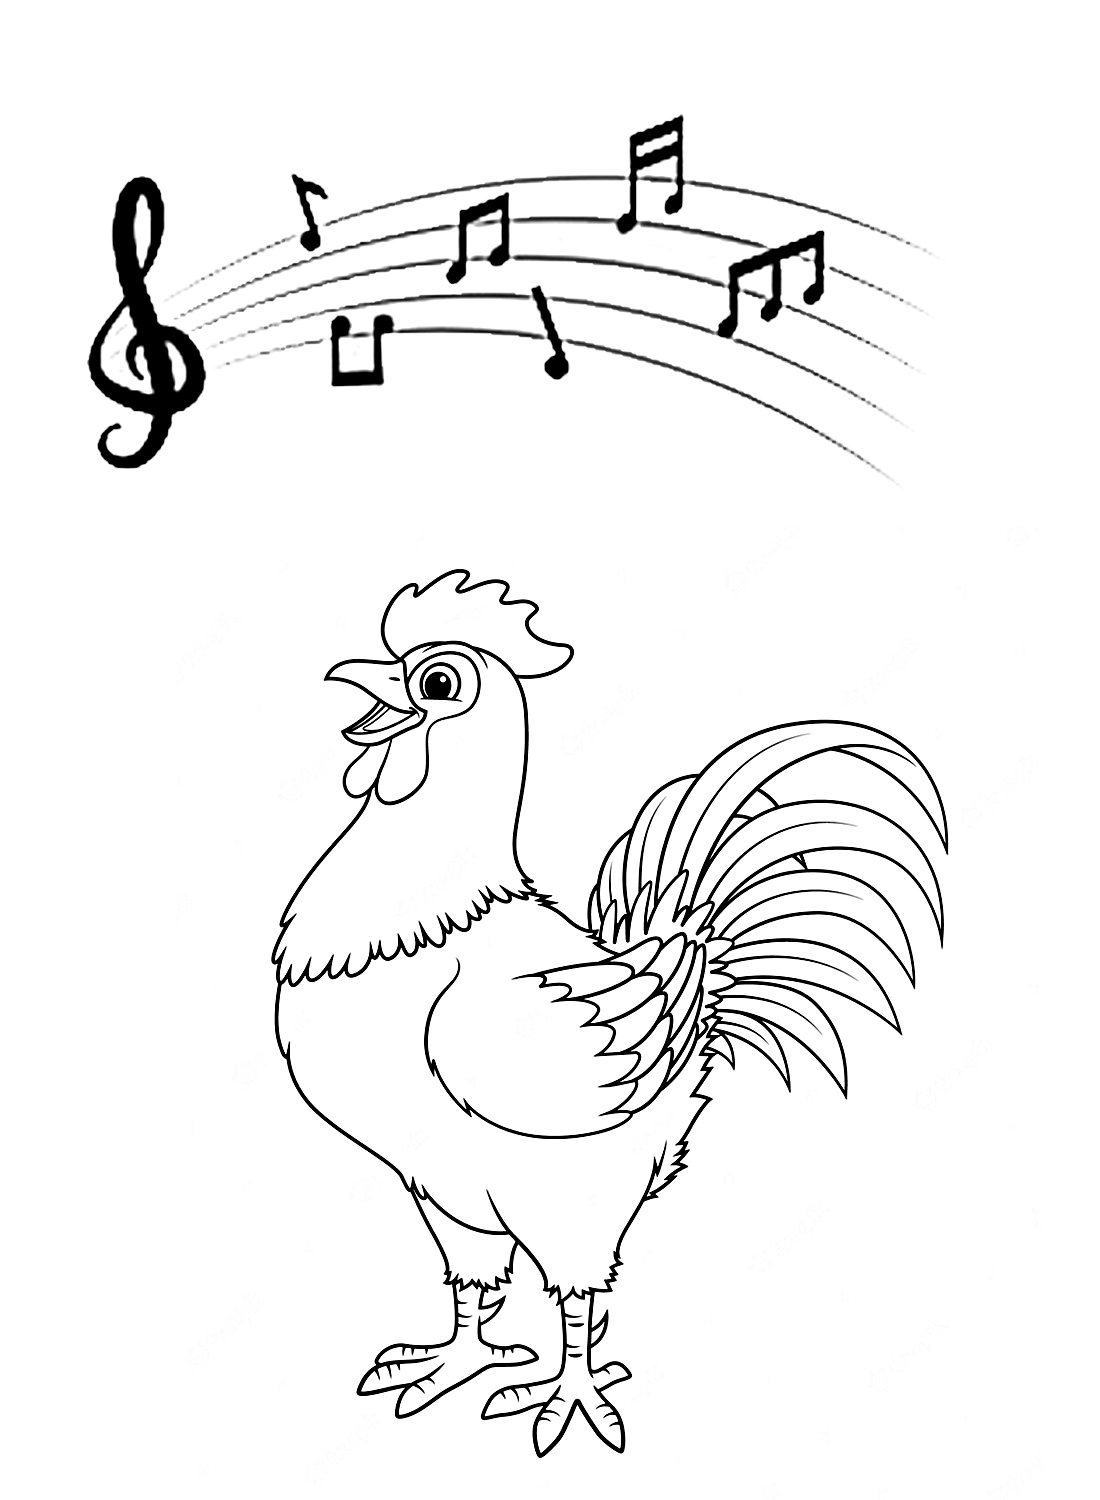 Un coq chantant de Rooster